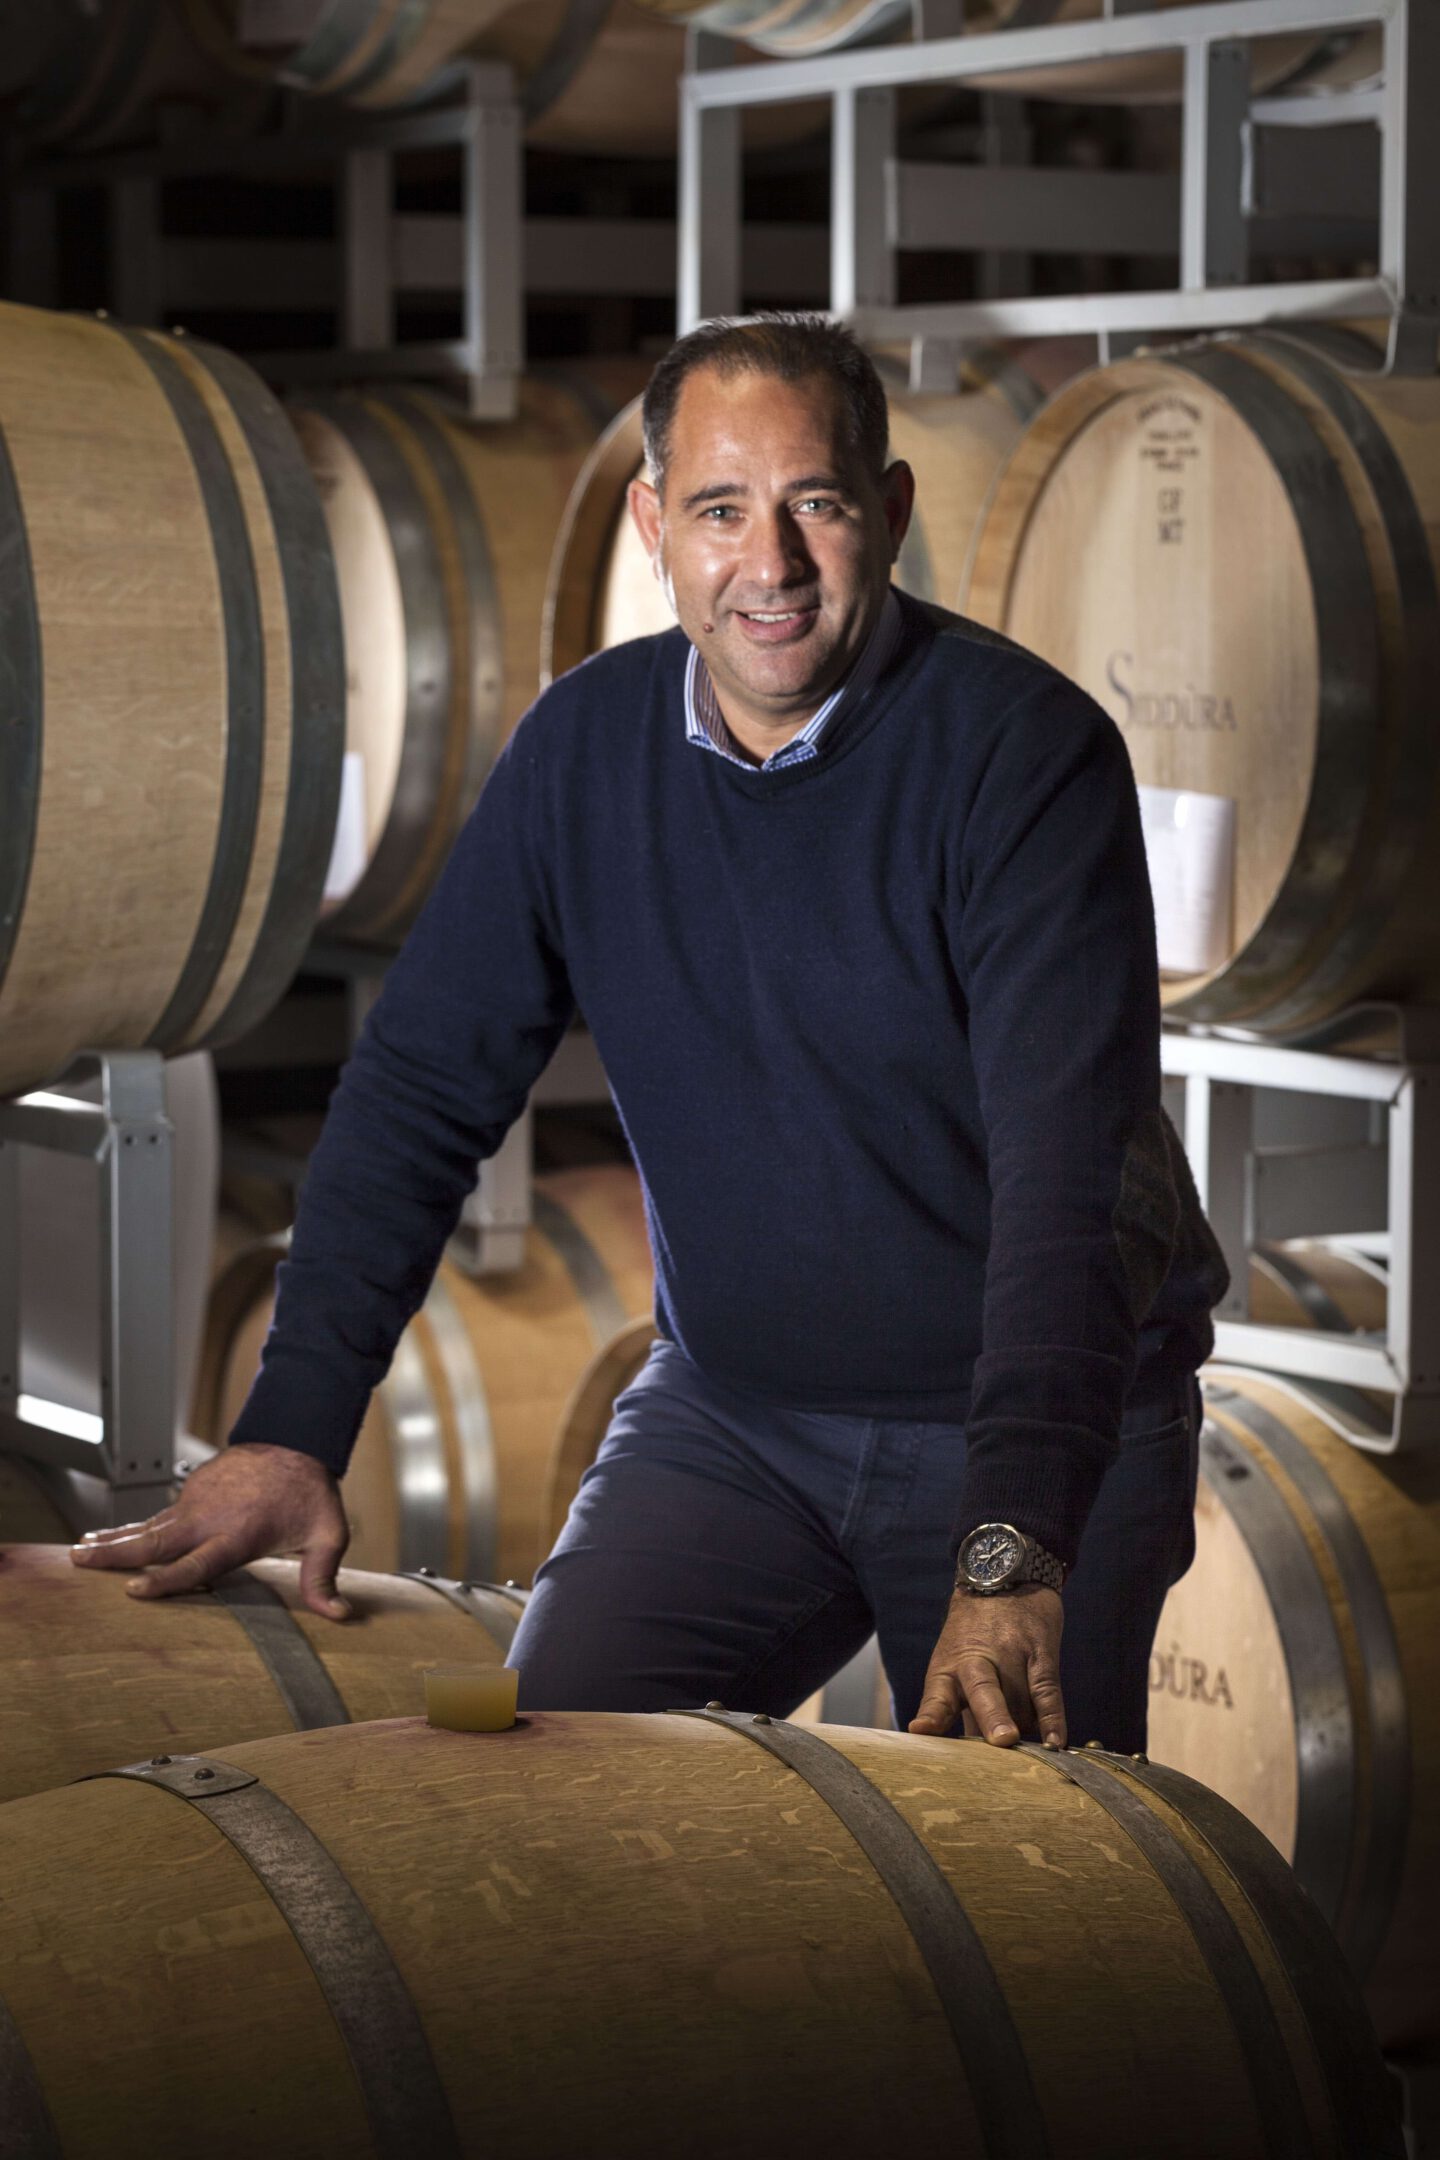 Siddura Massimo Ruggero Gutsdirektor wine wein gentlemens journey weinkafsliste